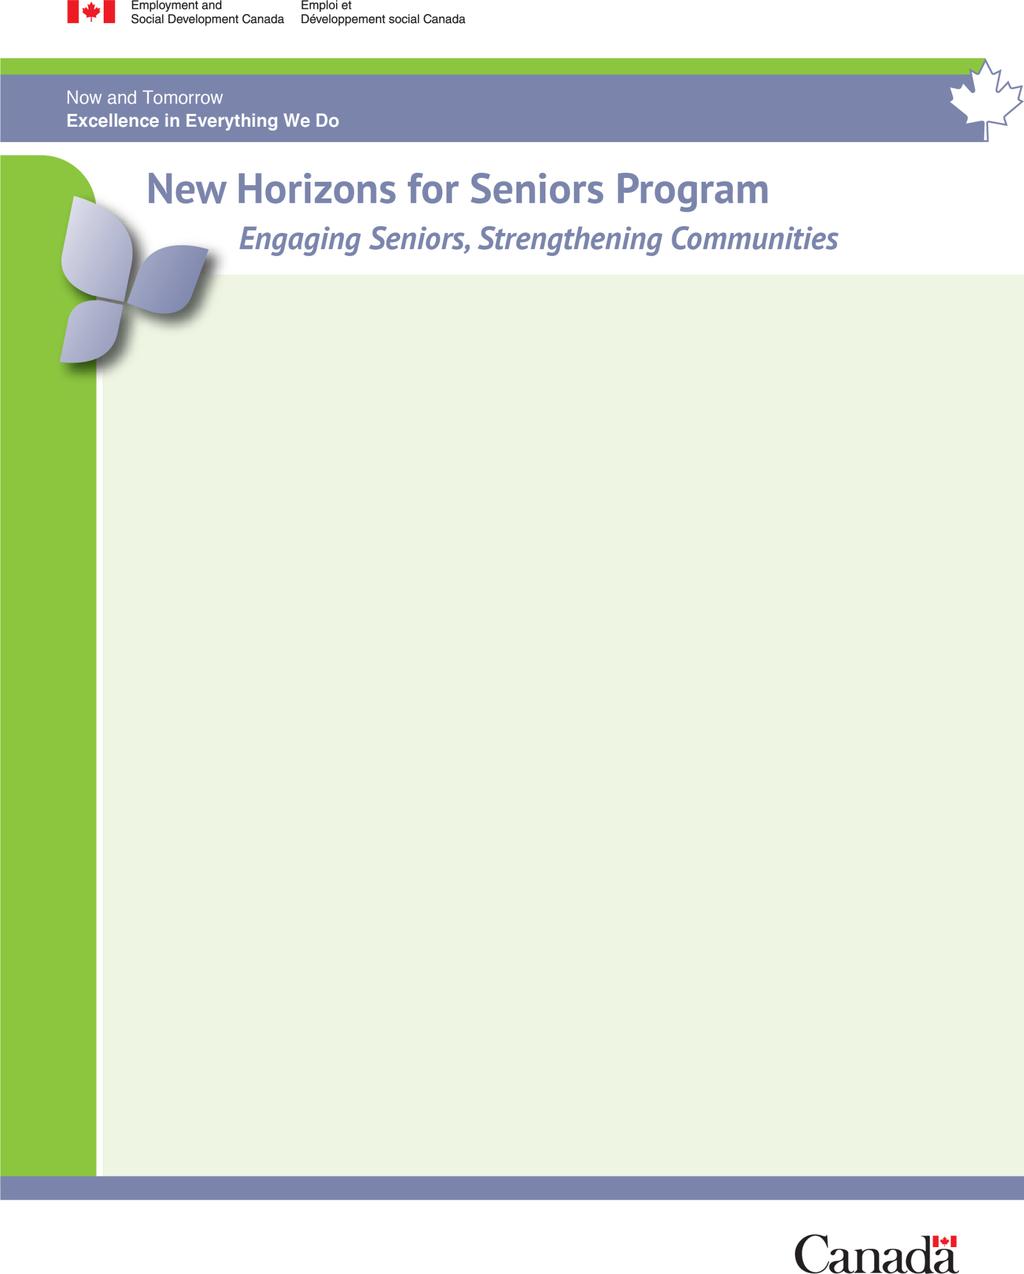 New Horizons for Seniors Program Community-Based Projects